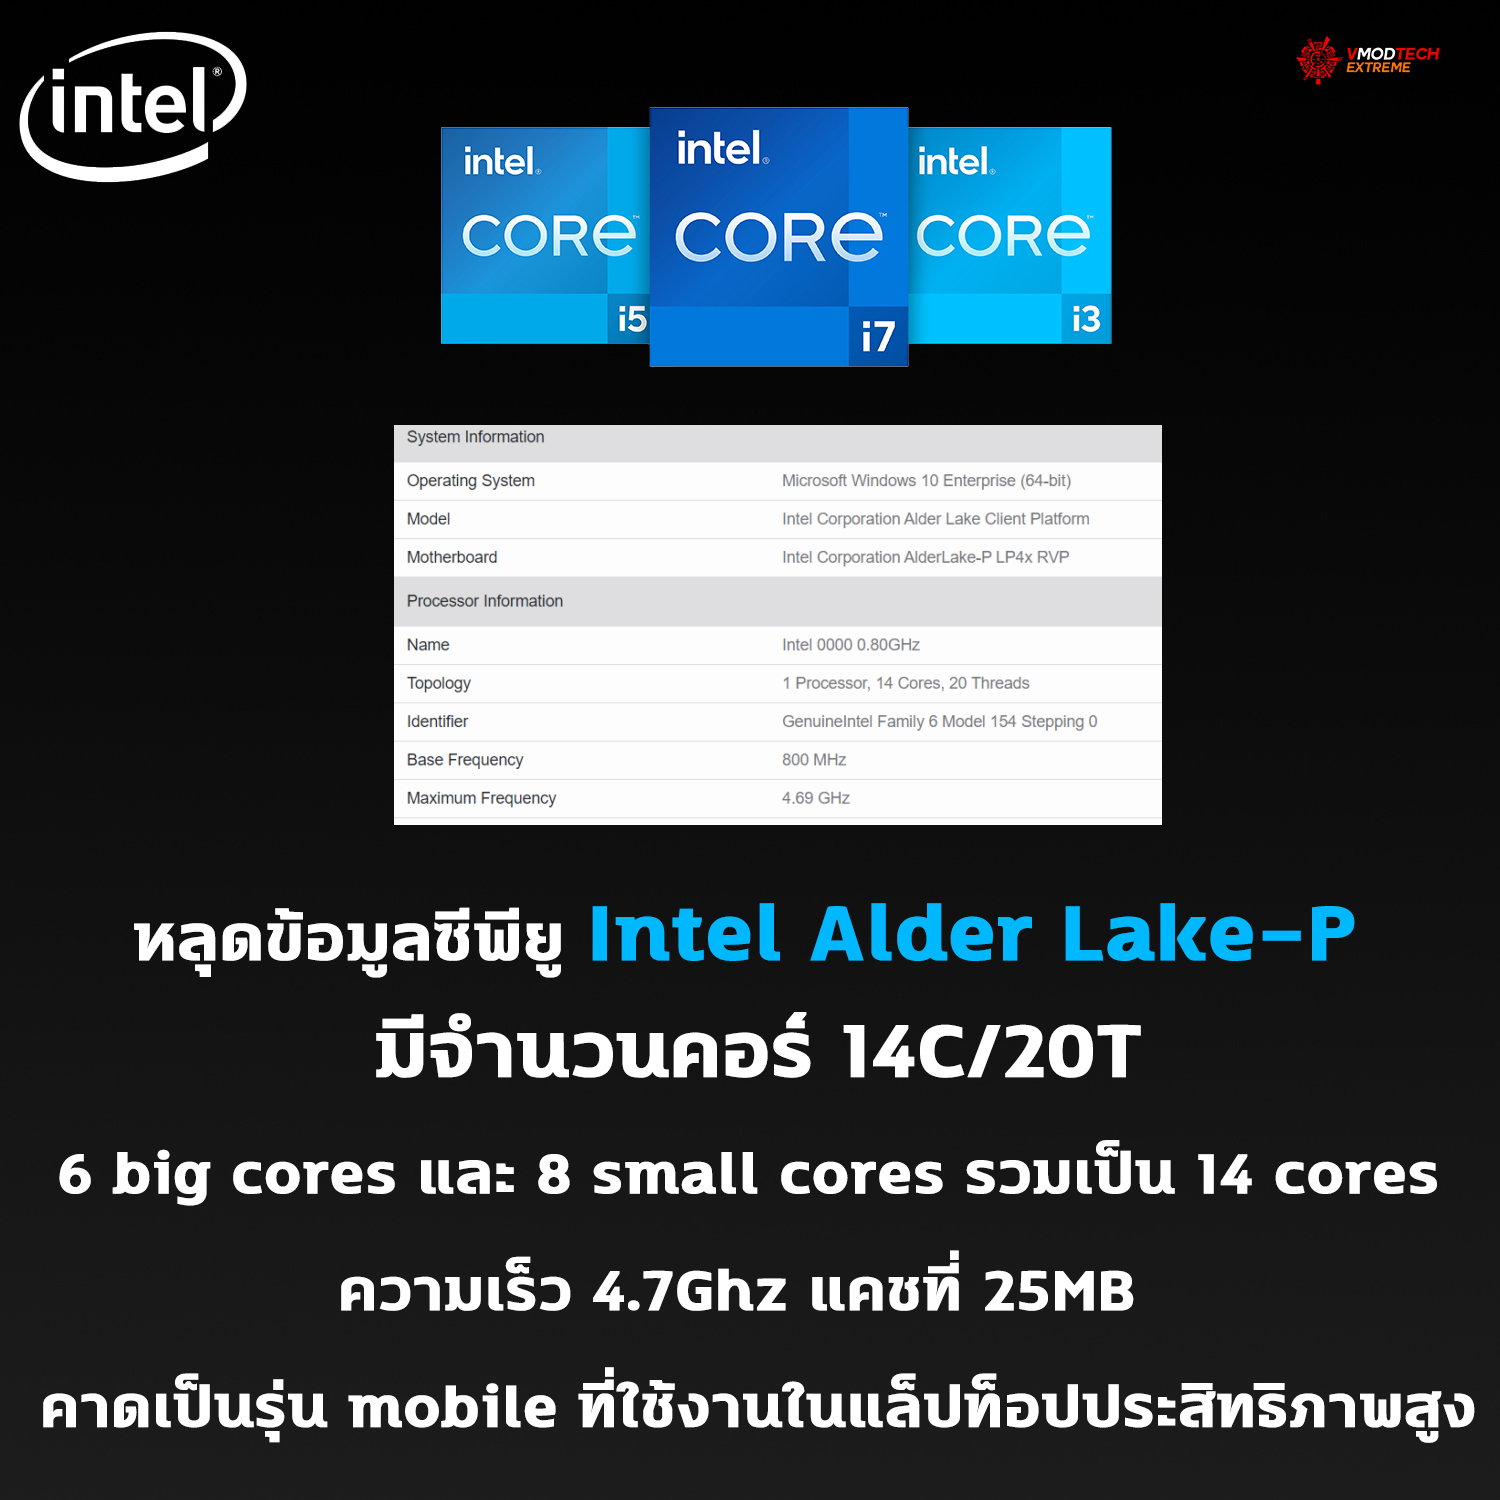 intel alder lake p หลุดข้อมูลซีพียู Intel Alder Lake P มีจำนวนคอร์ 14C/20T คาดเป็นรุ่น mobile ที่ใช้งานในแล็ปท็อปประสิทธิภาพสูง